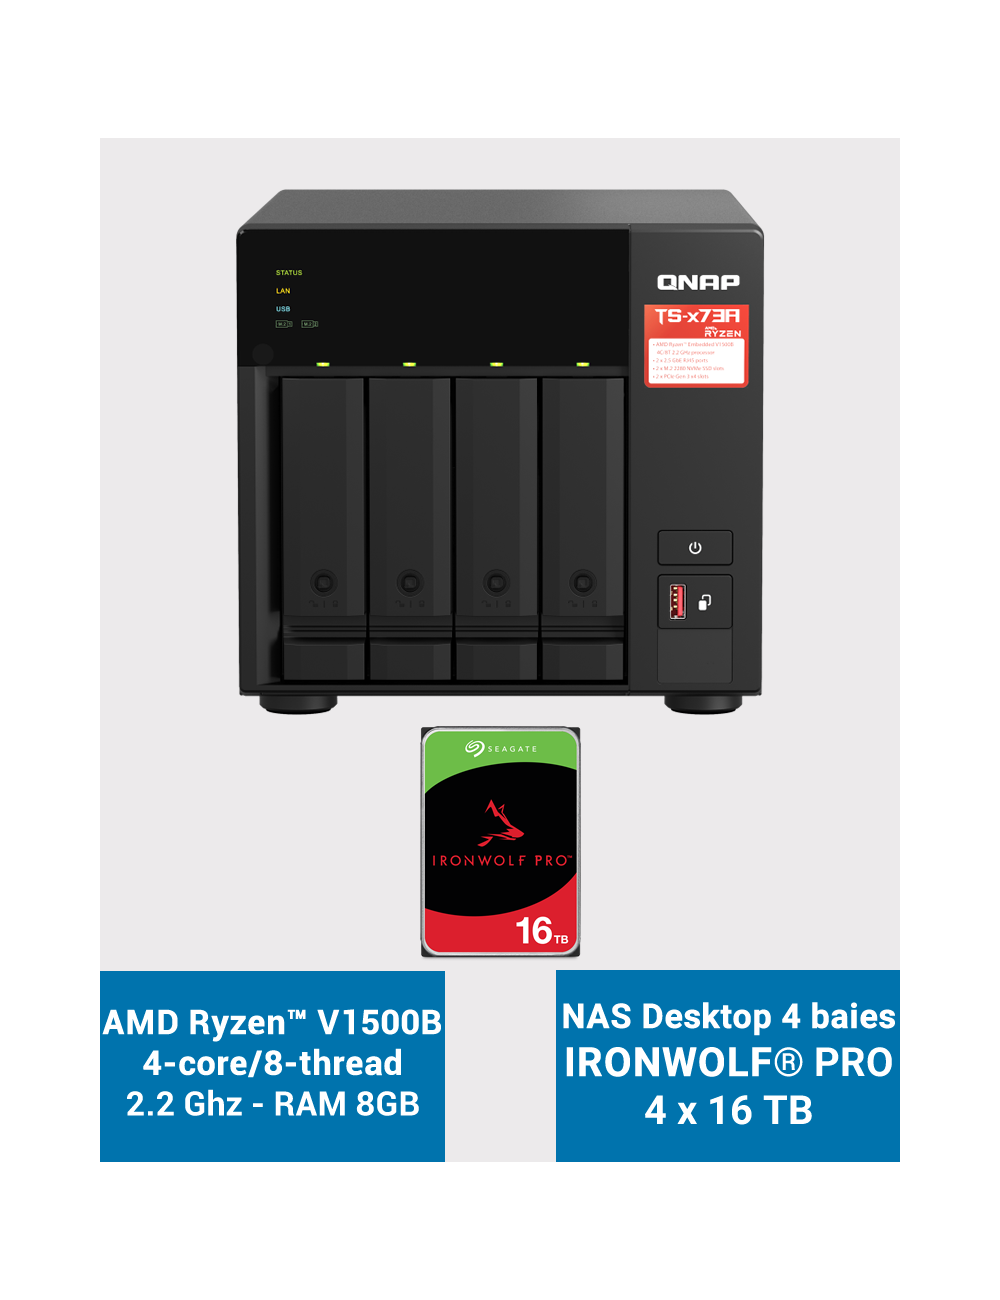 Qnap TS-473A 8GB NAS Server 4 bays IRONWOLF PRO 64TB (4x16TB)